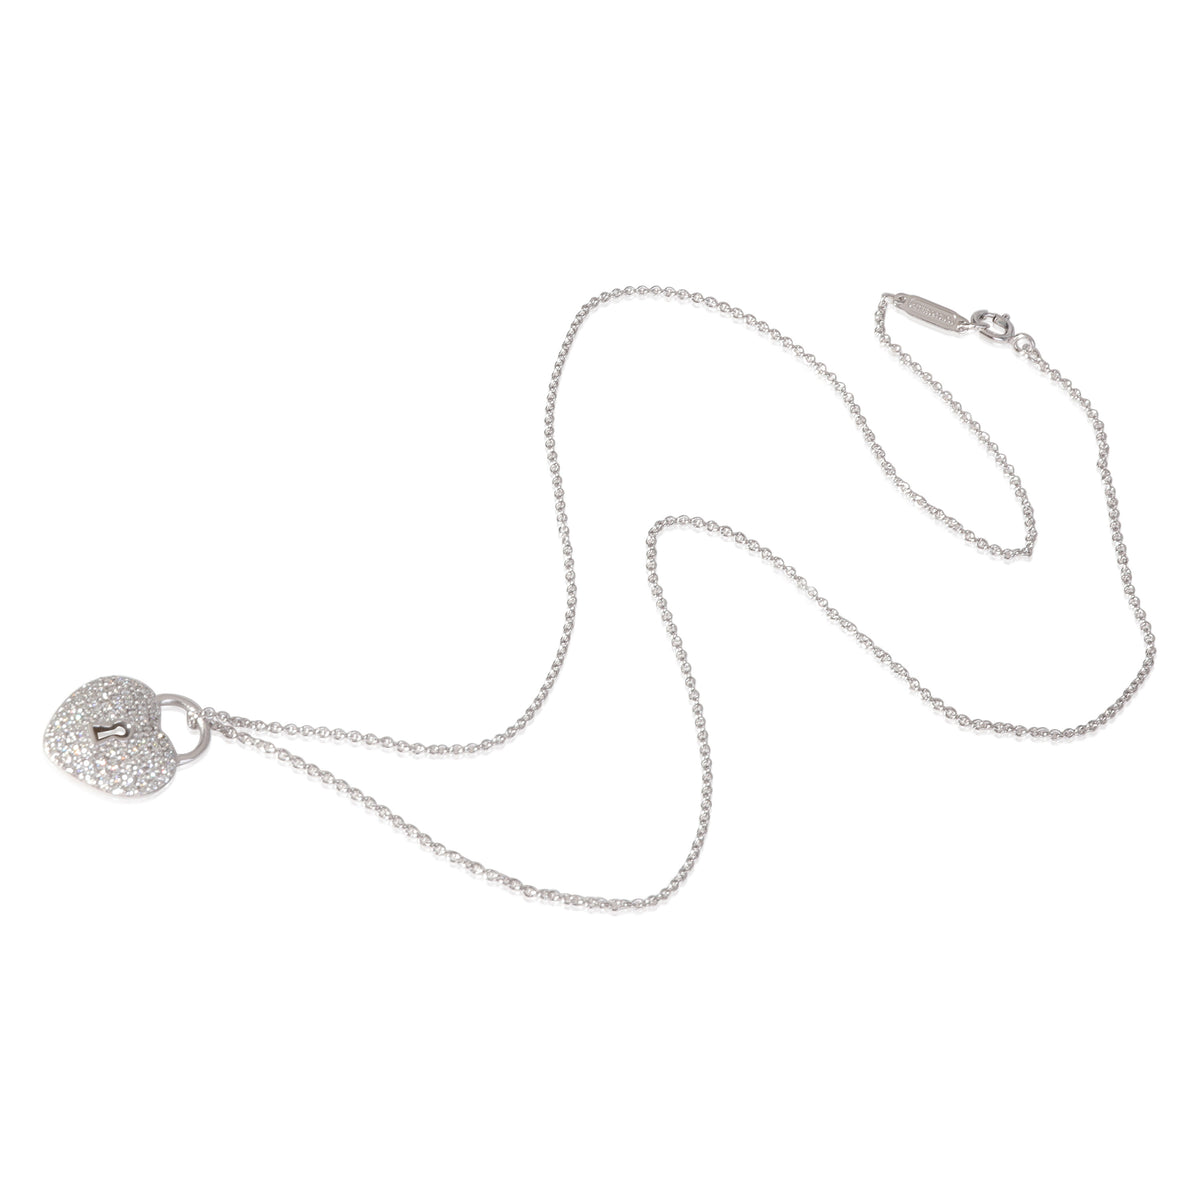 Tiffany & Co. Diamond Heart Lock Pendant in Platinum 0.25 Ctw on a Chain